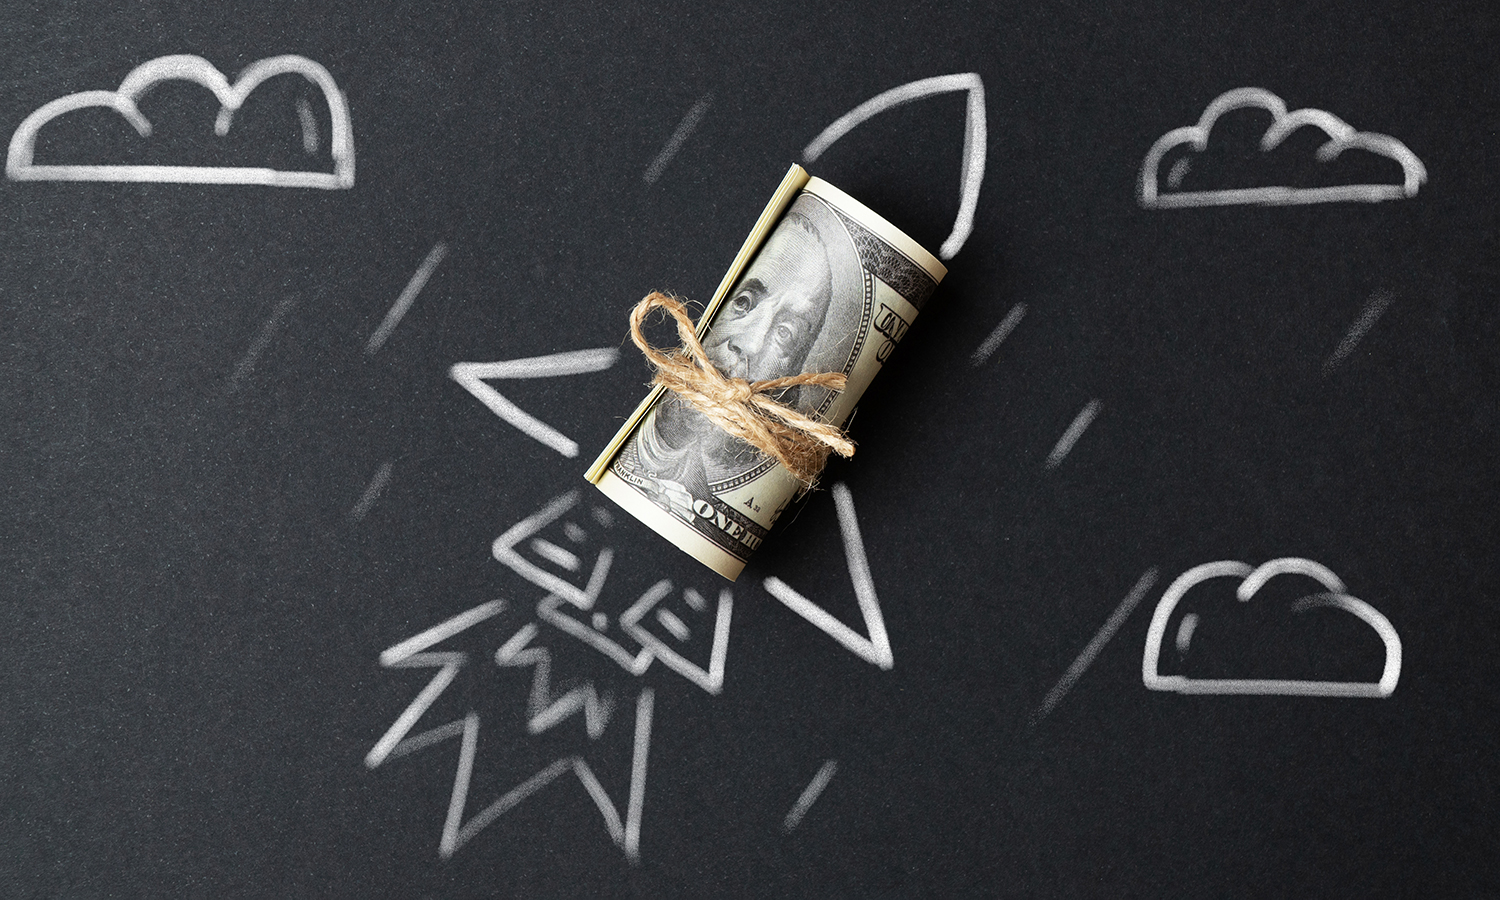 Roll of money with rocket scene drawn around it on a chalkboard